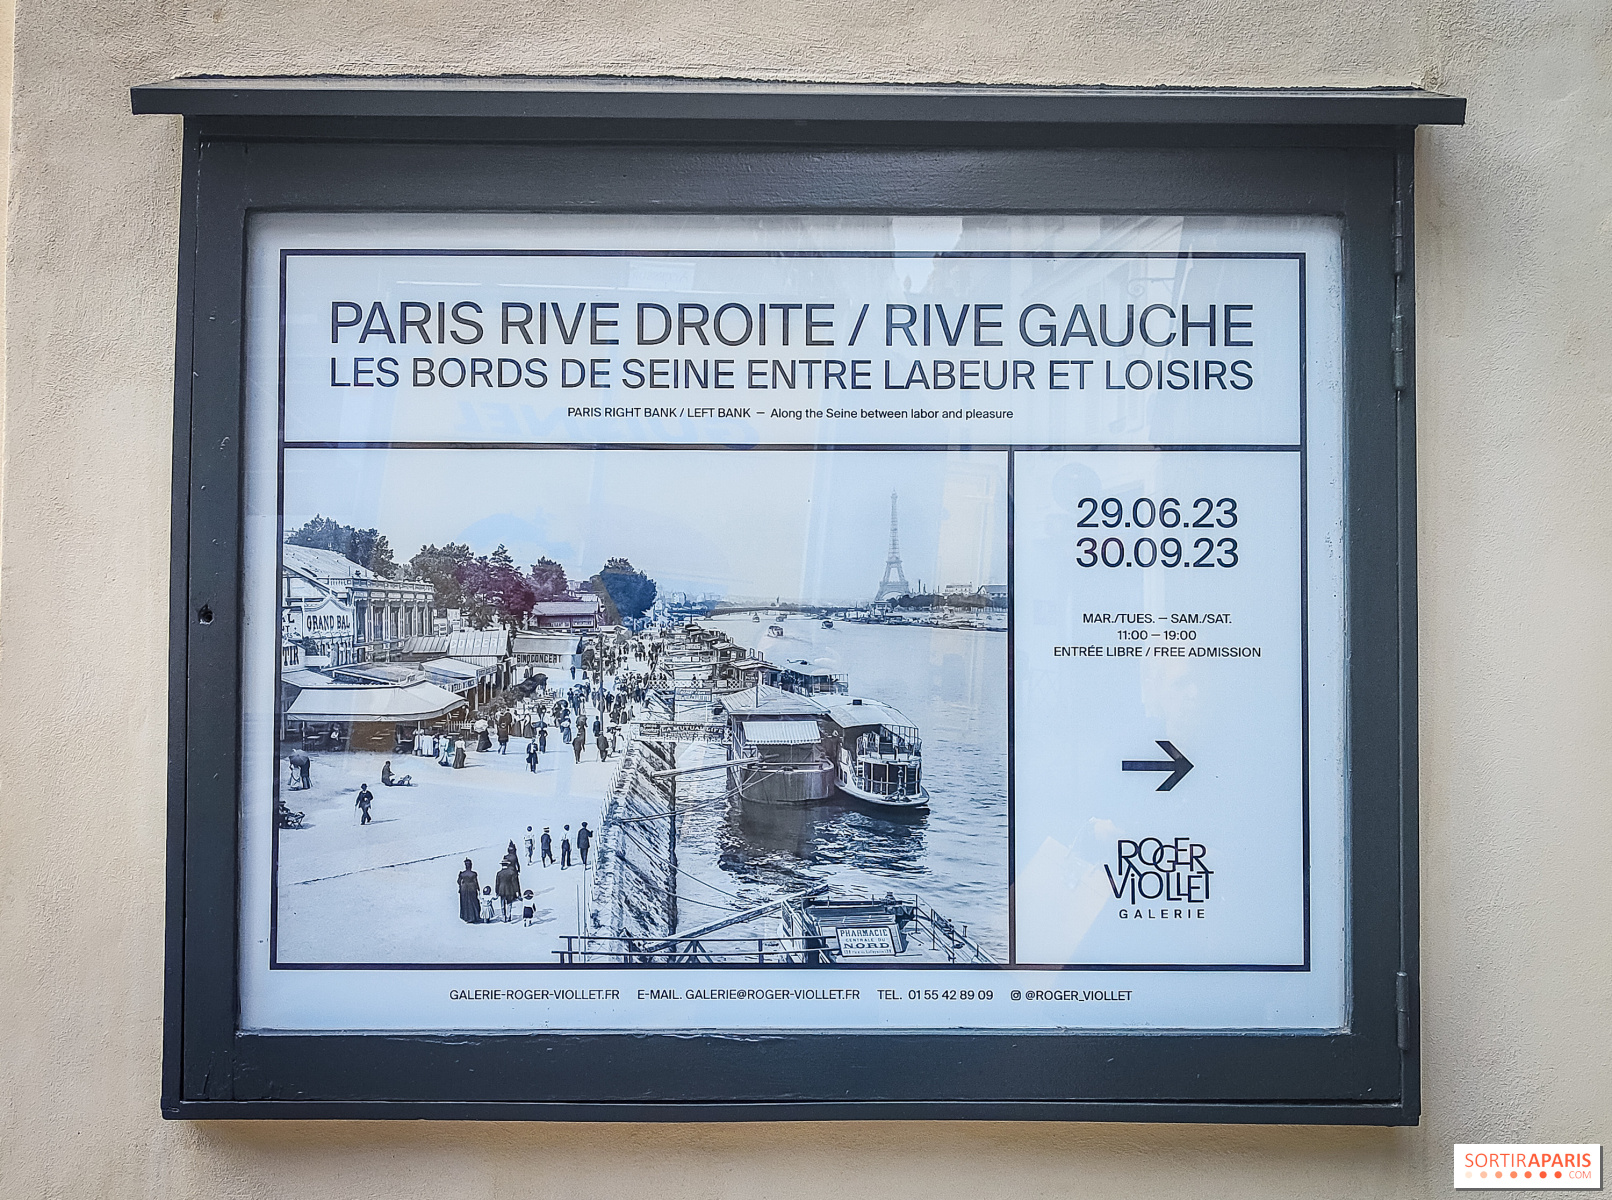 Paris Rive droite/Rive gauche: photo exhibition around the Seine extended  at Galerie Roger-Viollet 